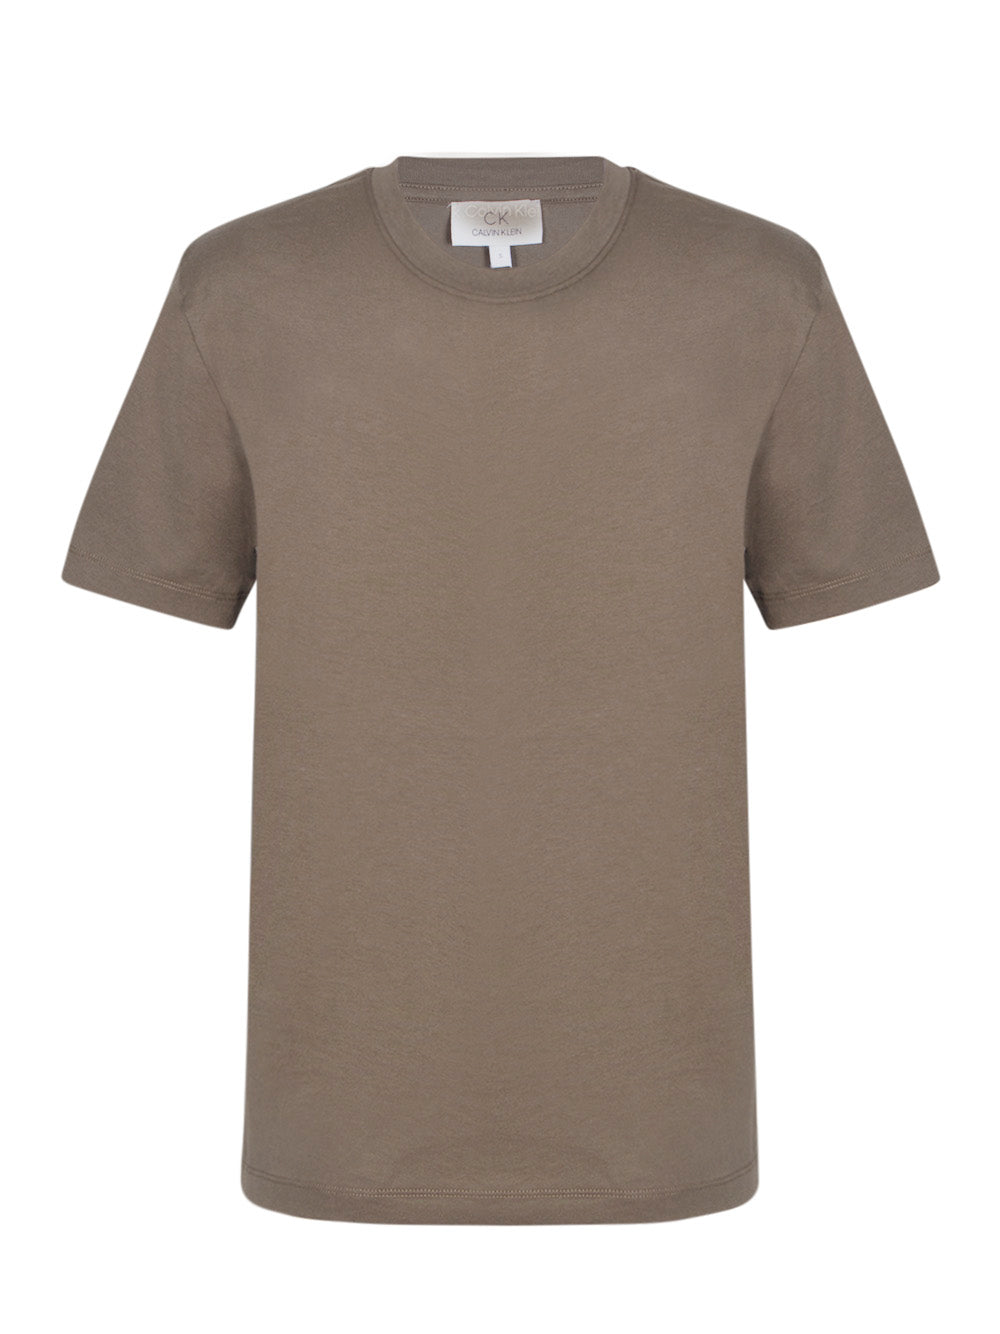 Merecerized-Cotton-Interlock-T-Shirt-Military-01